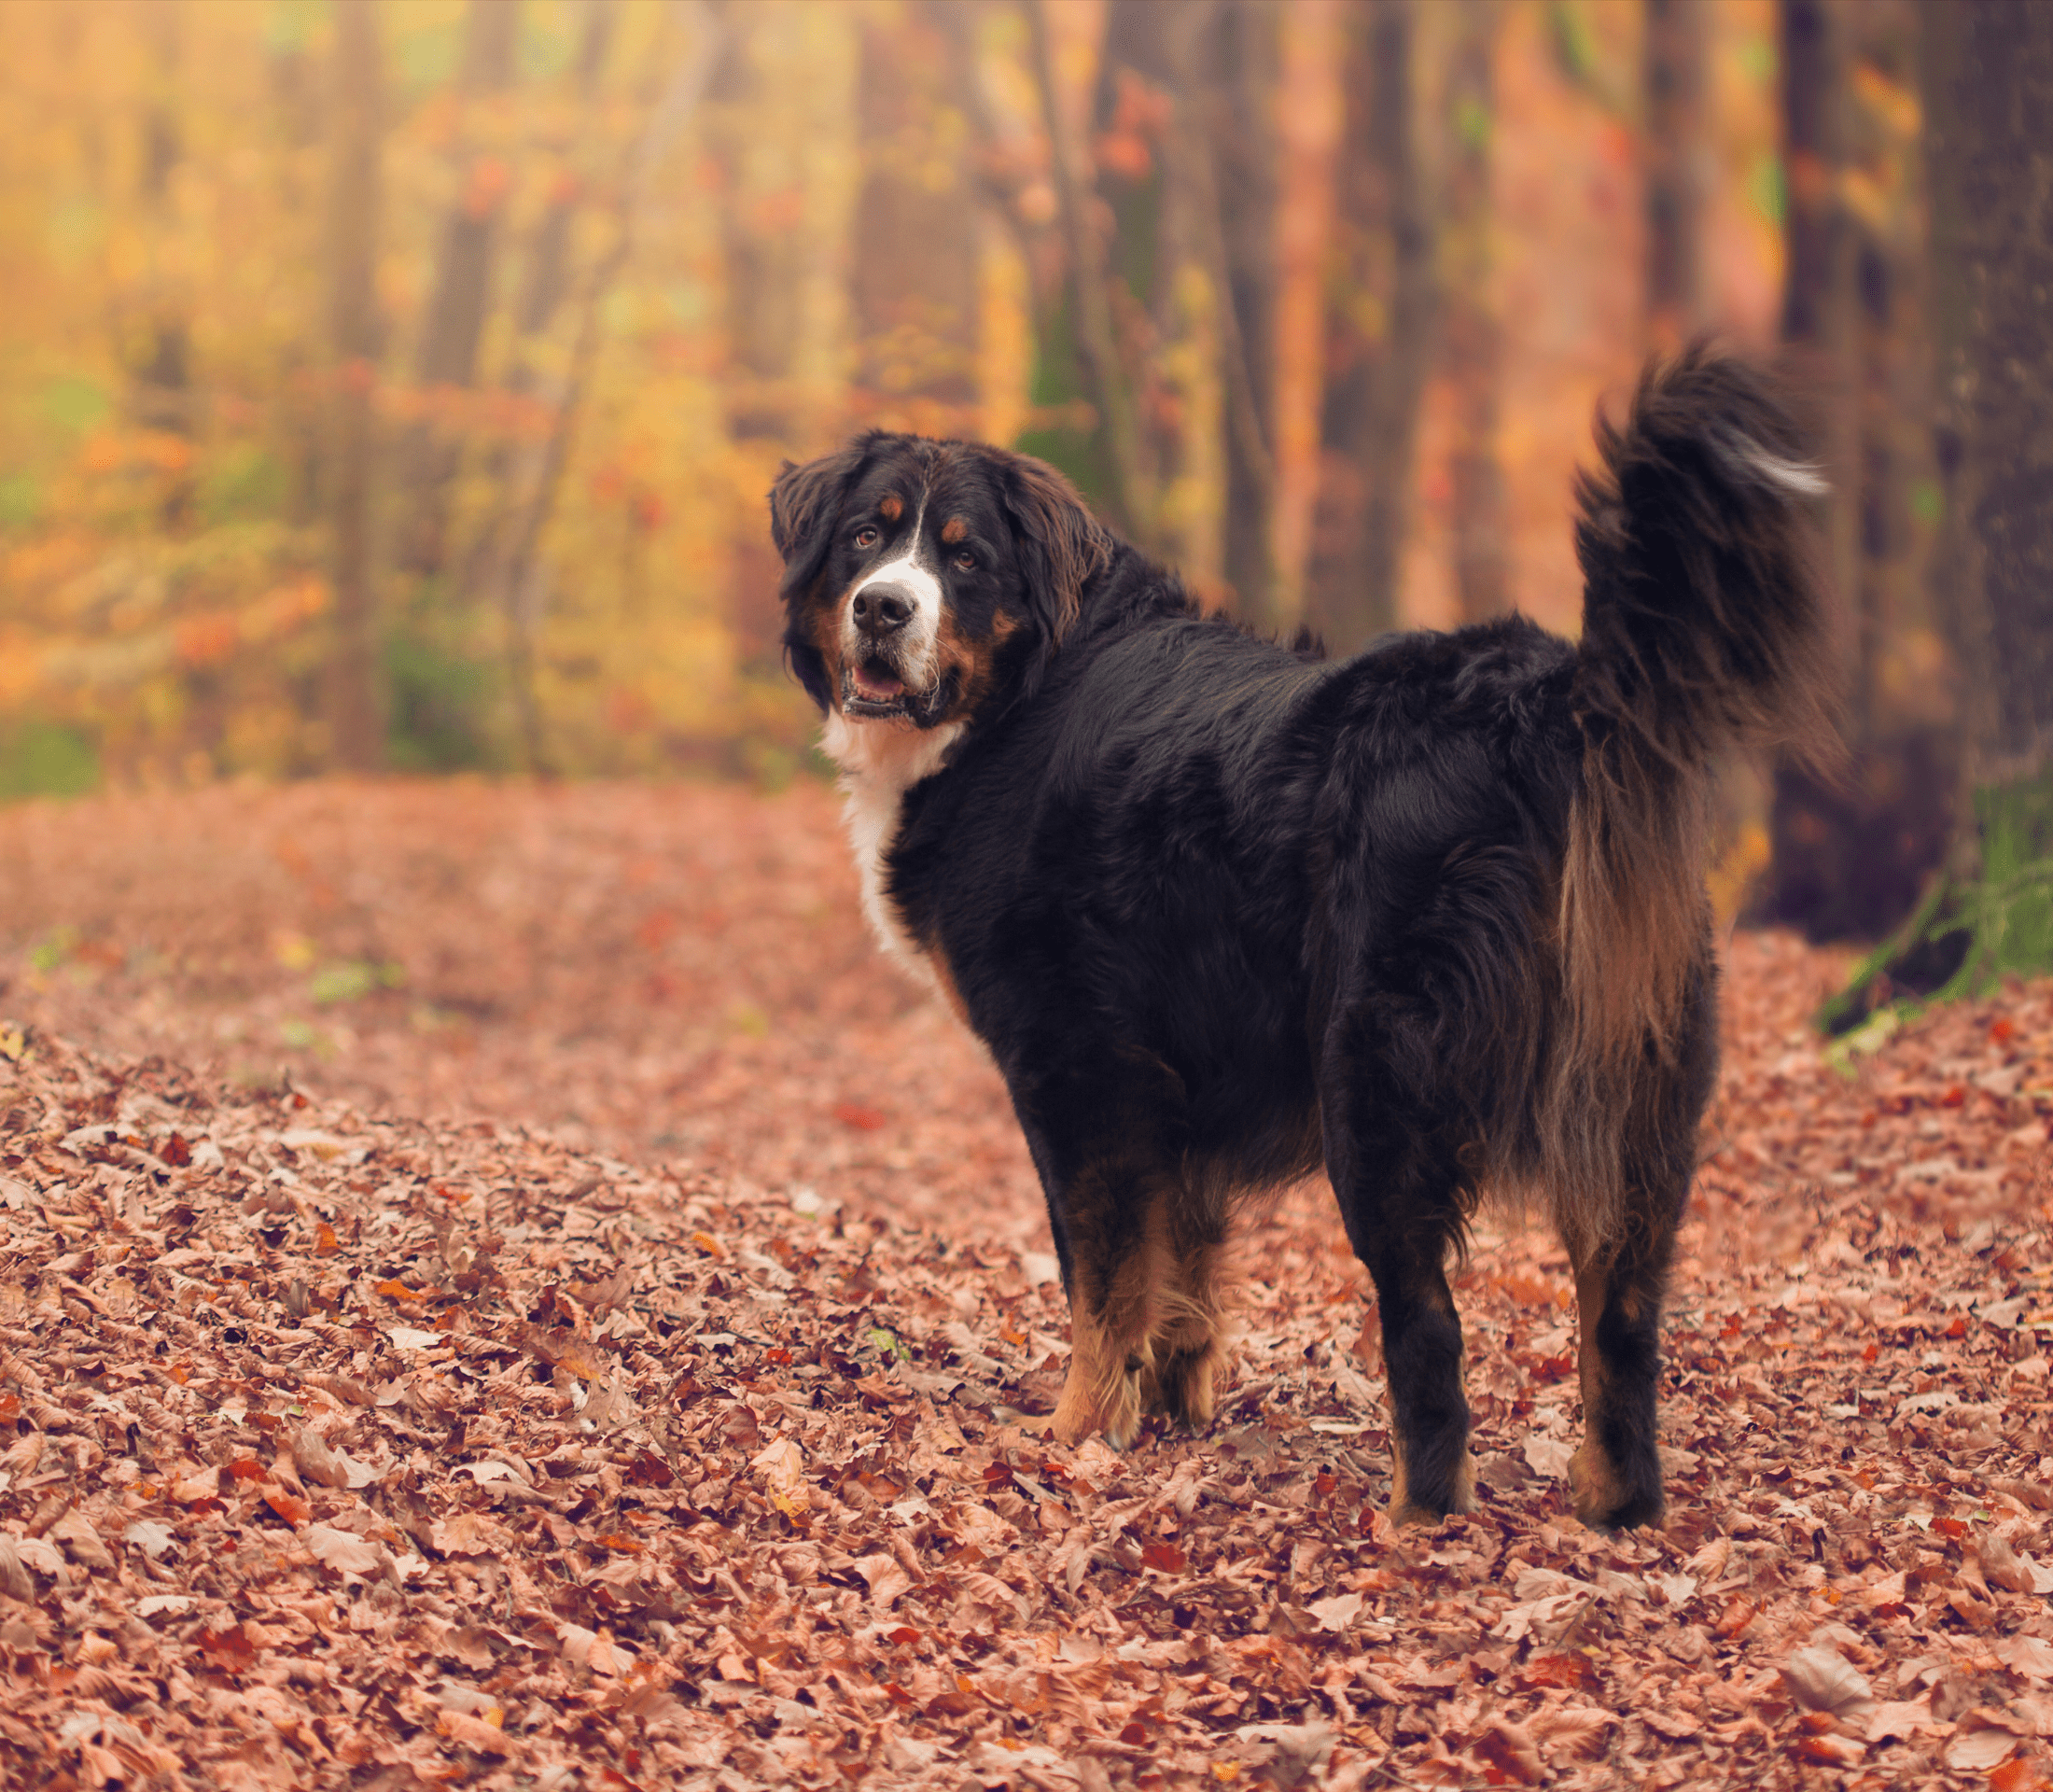 Bernese mountain dog standing on fallen leaves